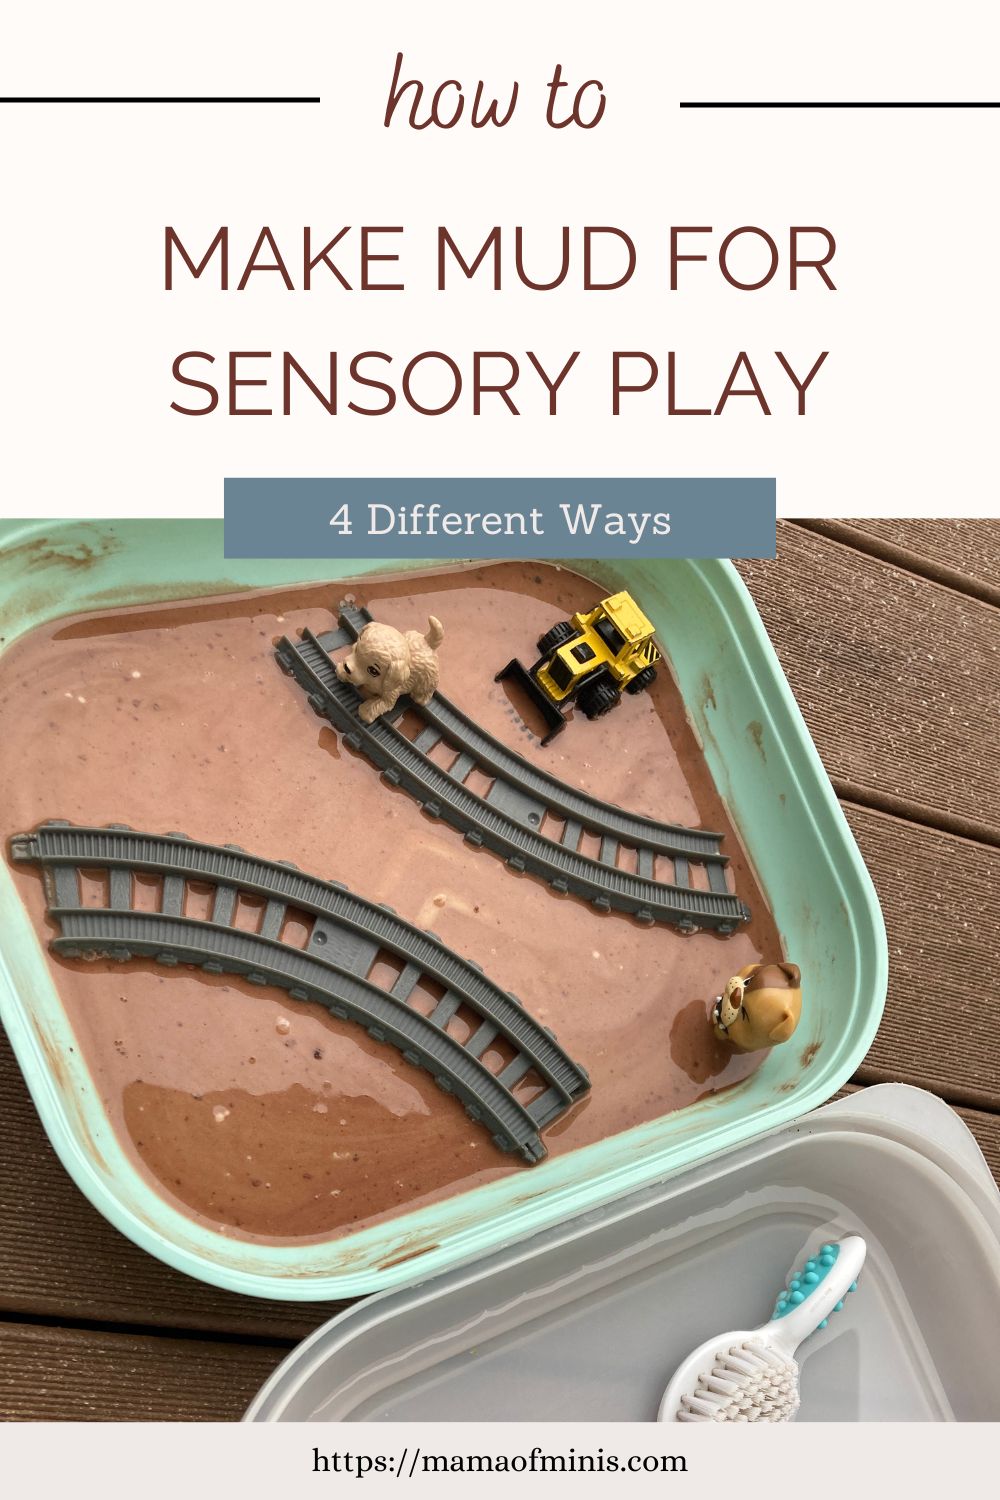 How to Make Mud for Sensory Play